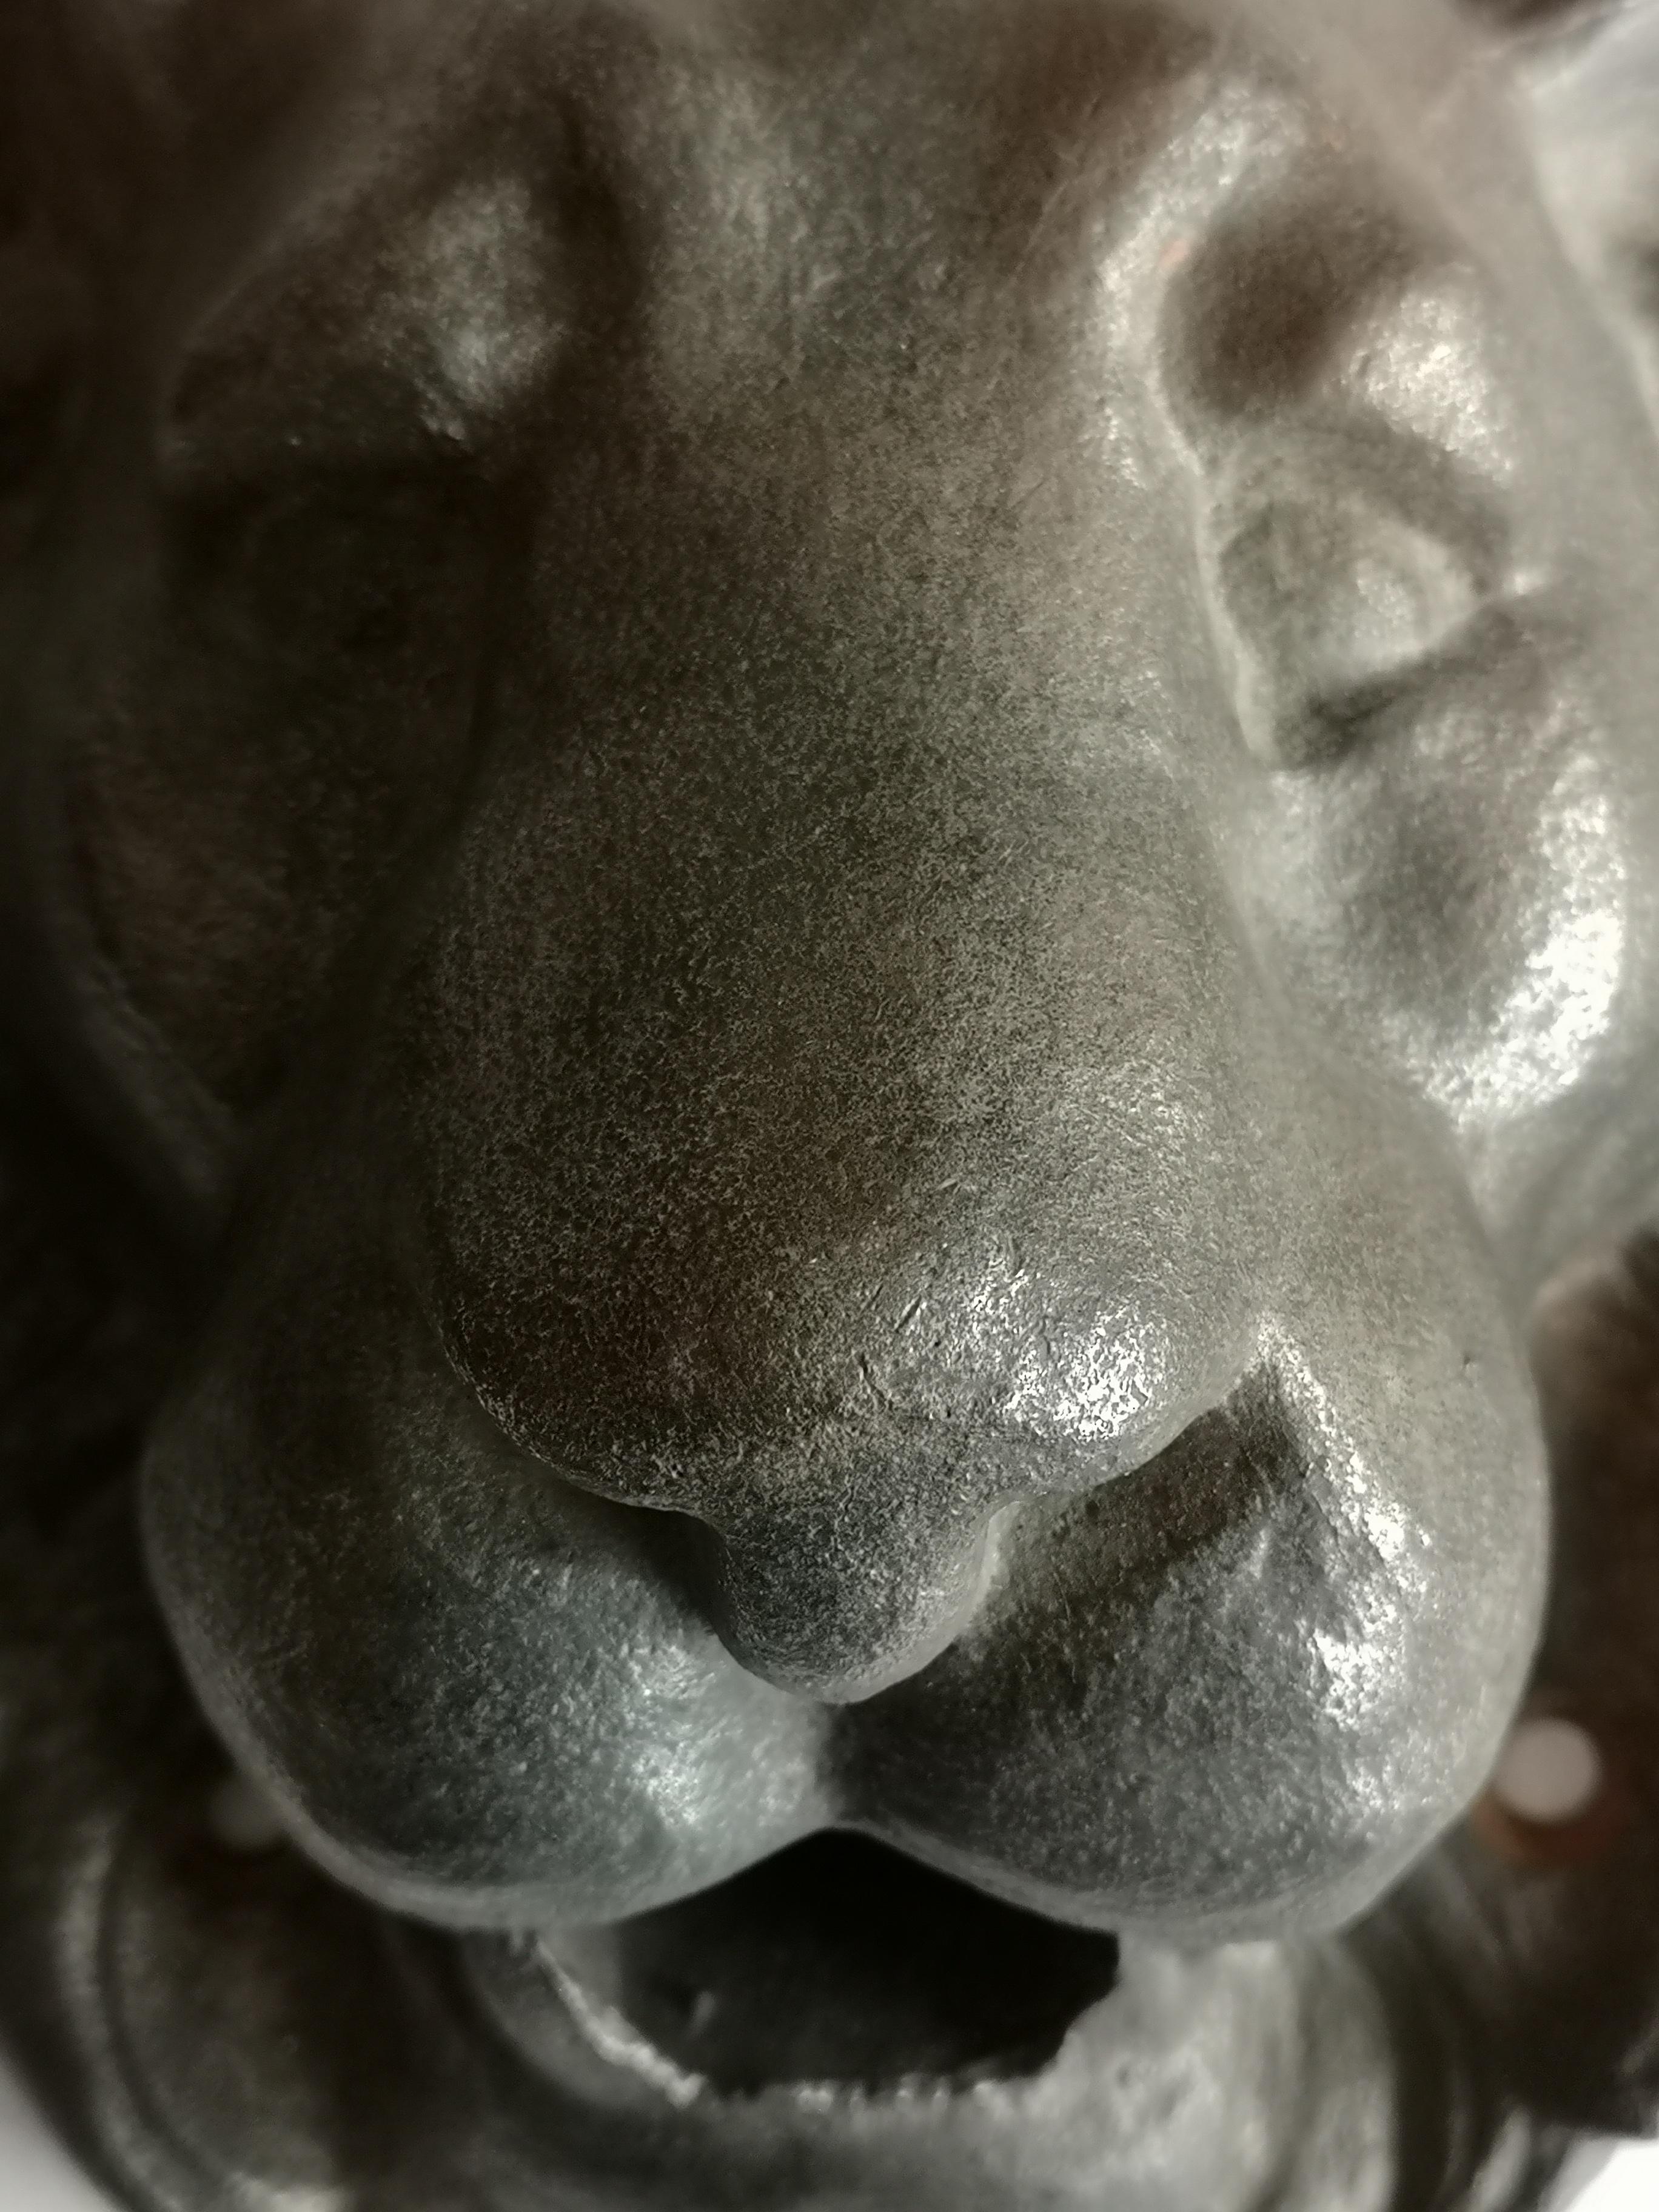 Timeless lion head iron fountain garden spout.
Decorative accent lion head sculpture.
Nice patina.